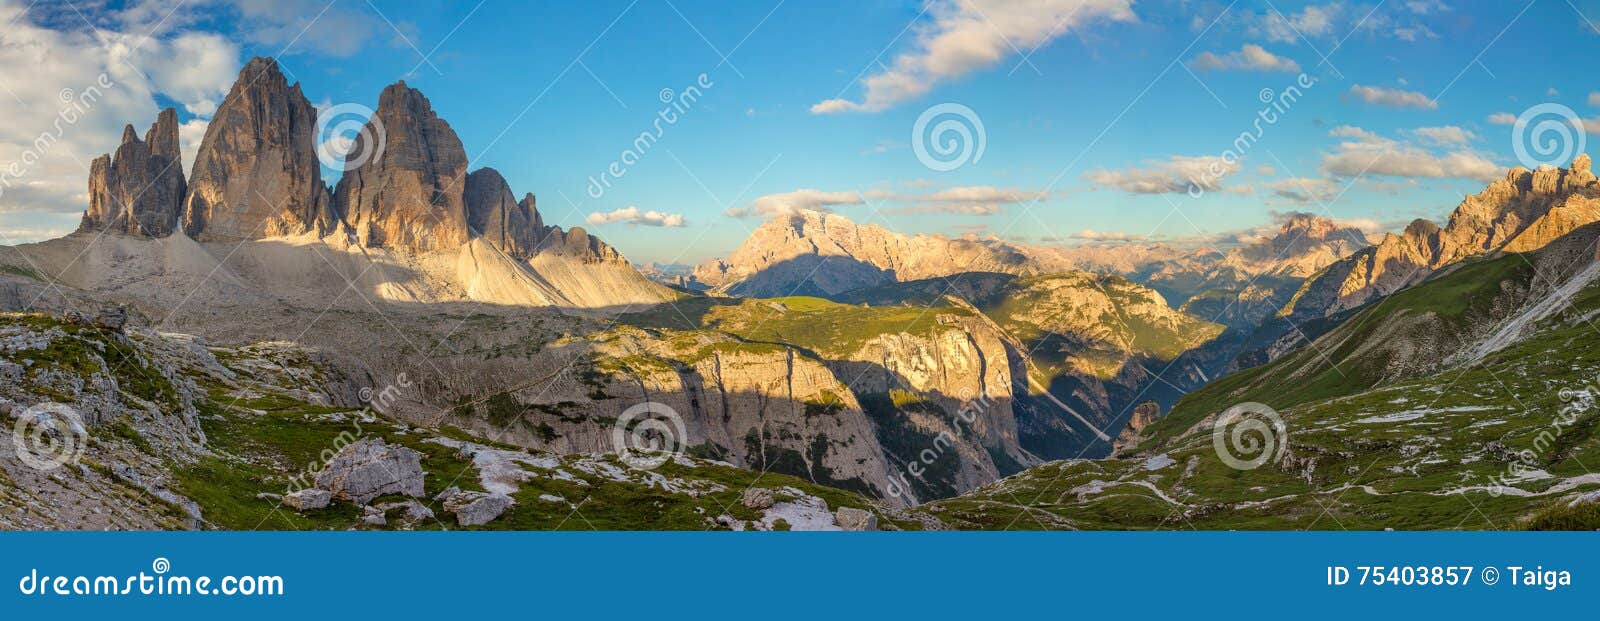 panorama of famous tre cime di lavaredo, dolomites alps, italy,